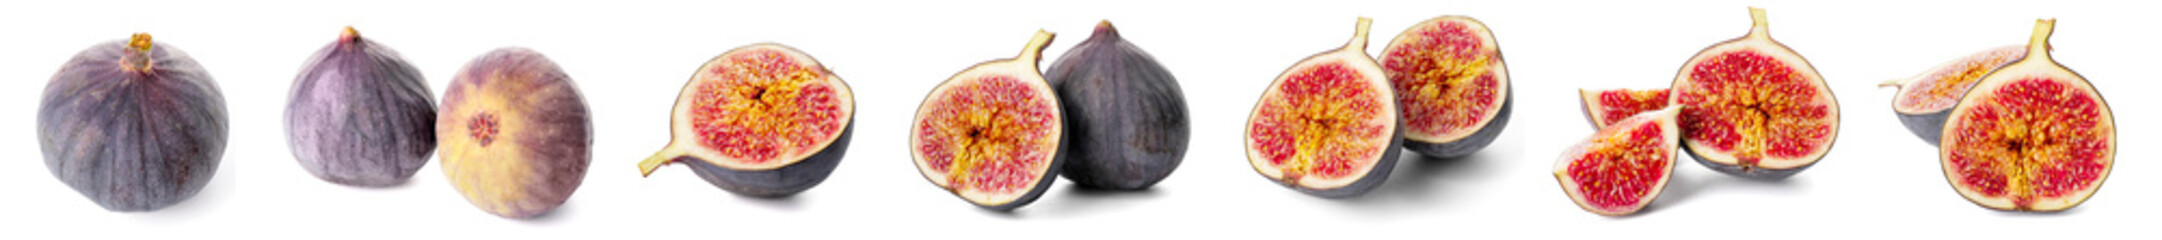 Set of fresh figs on white background